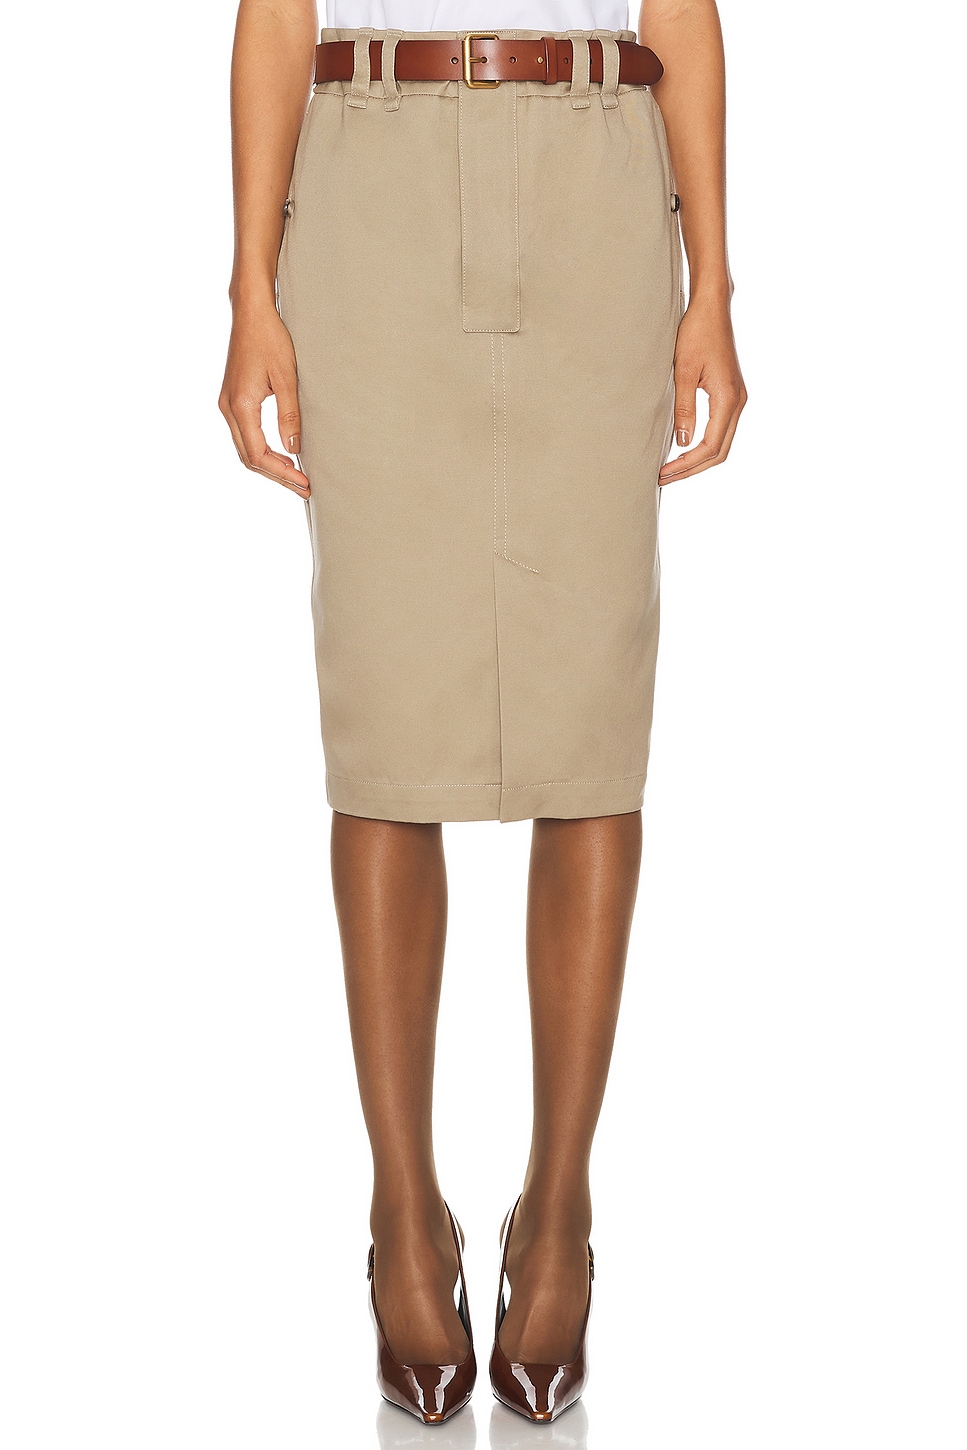 Image 1 of Saint Laurent Pencil Skirt in Magestic